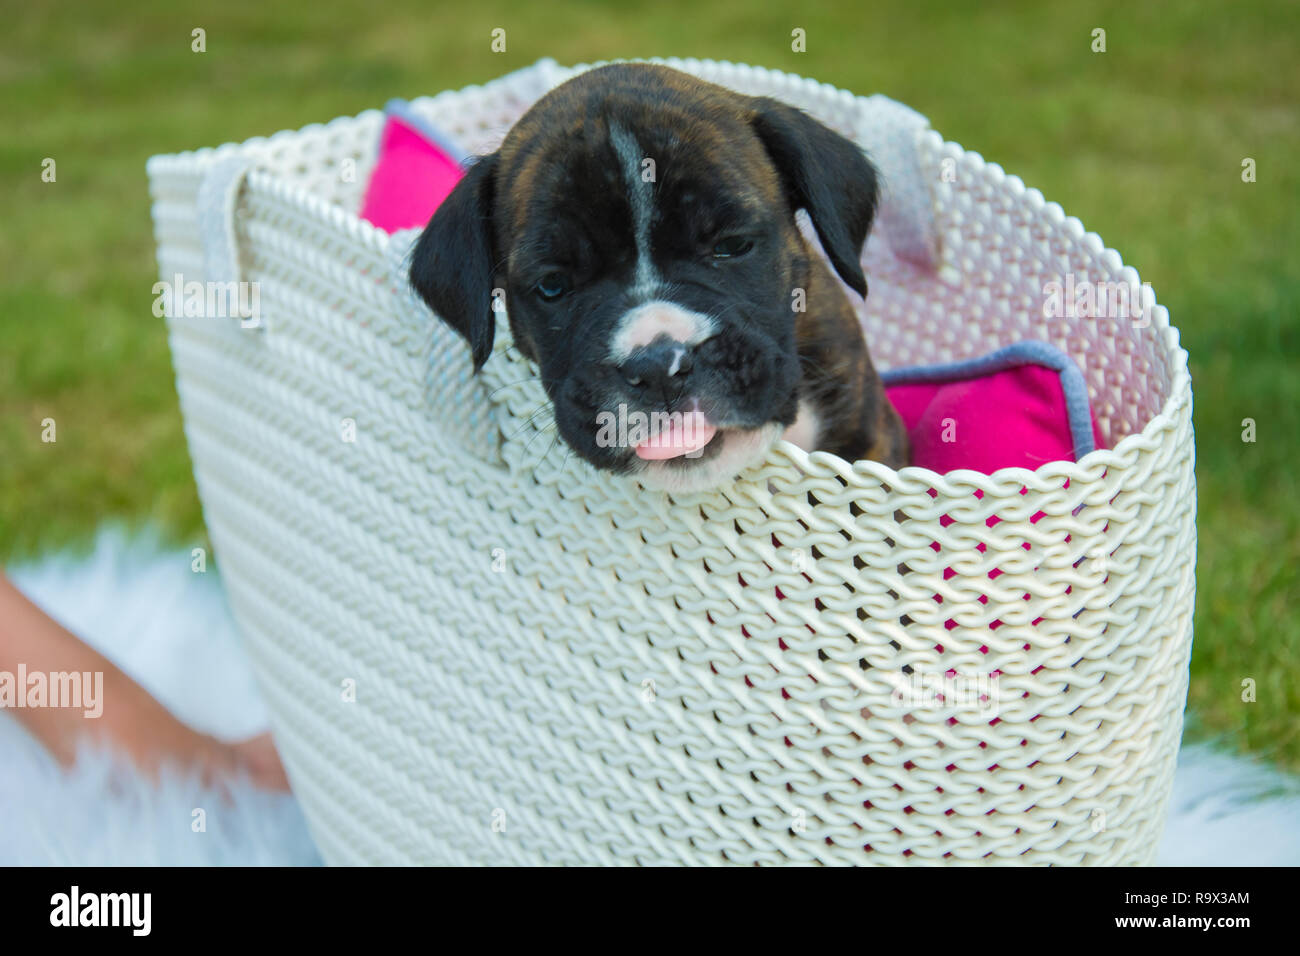 Little black puppy in a white basket - portrait Stock Photo